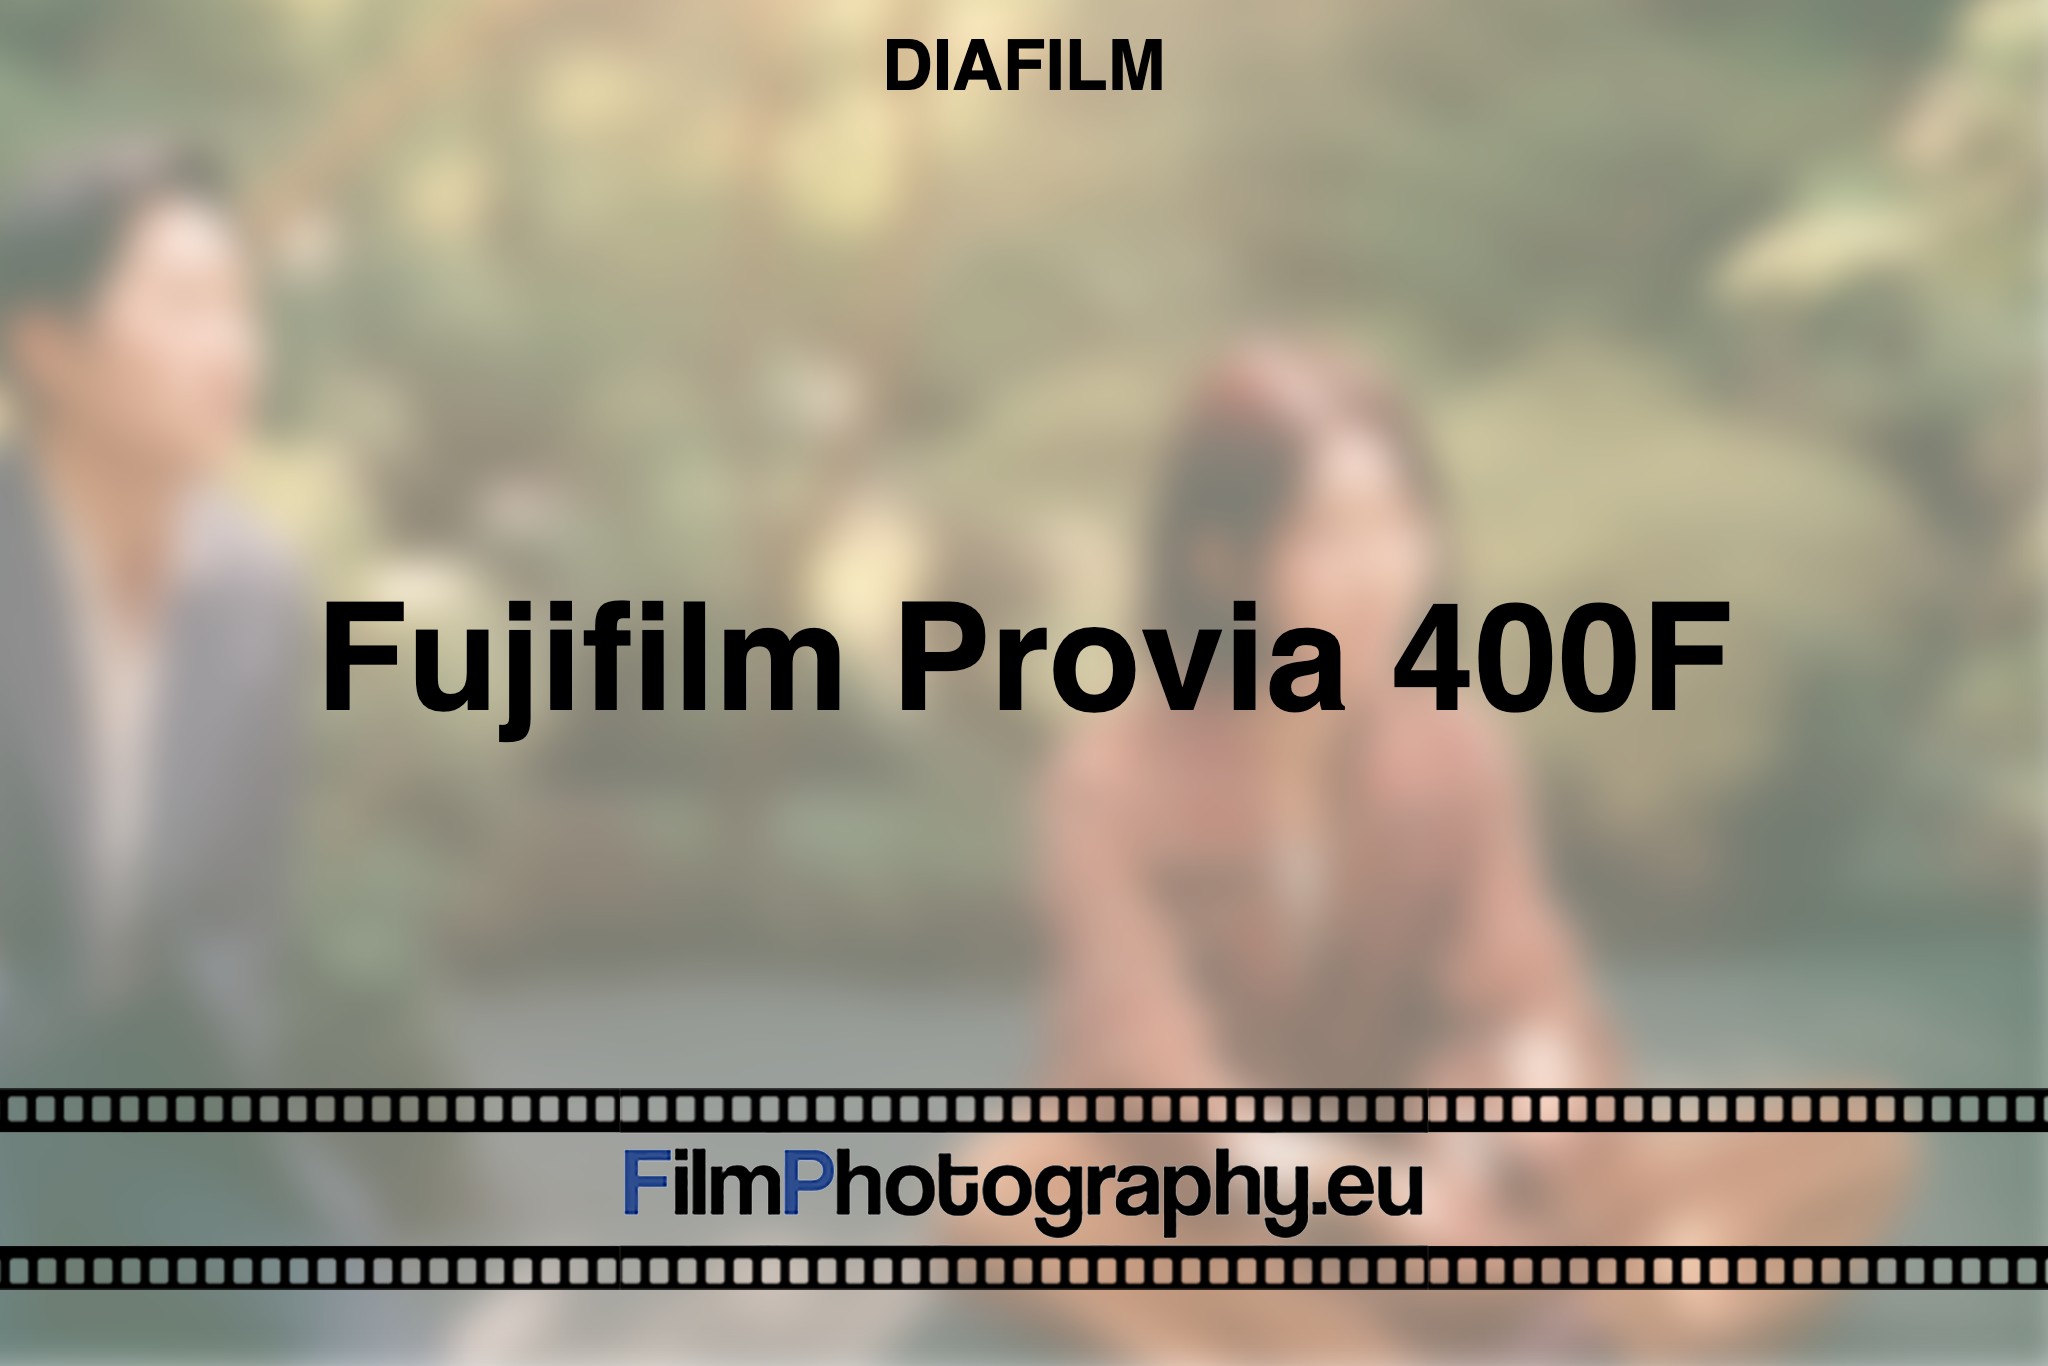 fujifilm-provia-400f-diafilm-bnv